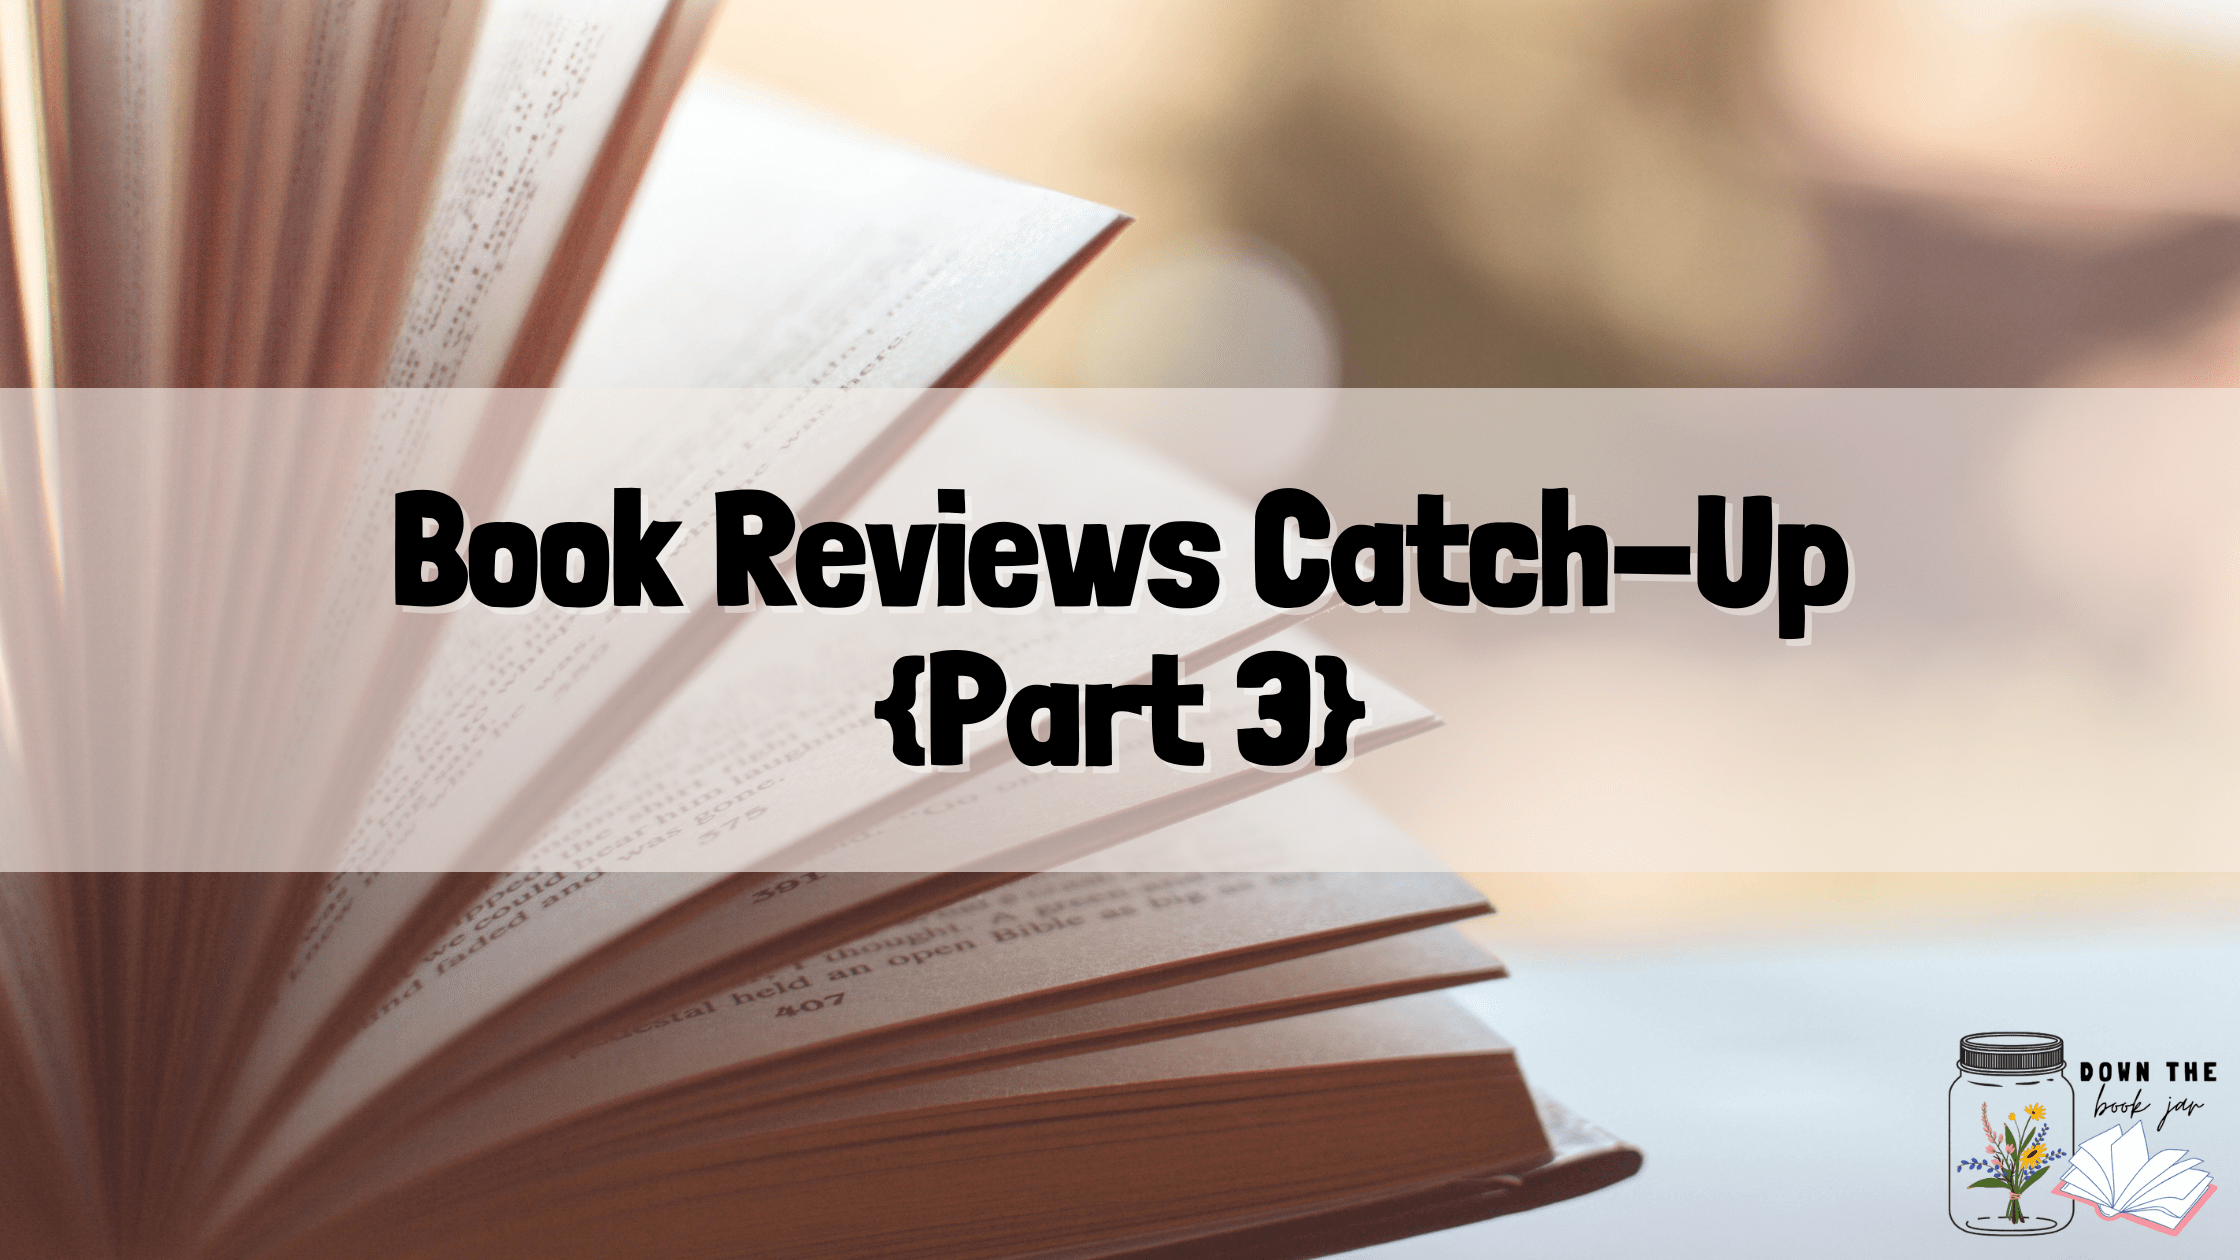 Book Reviews Catch-Up Part 3